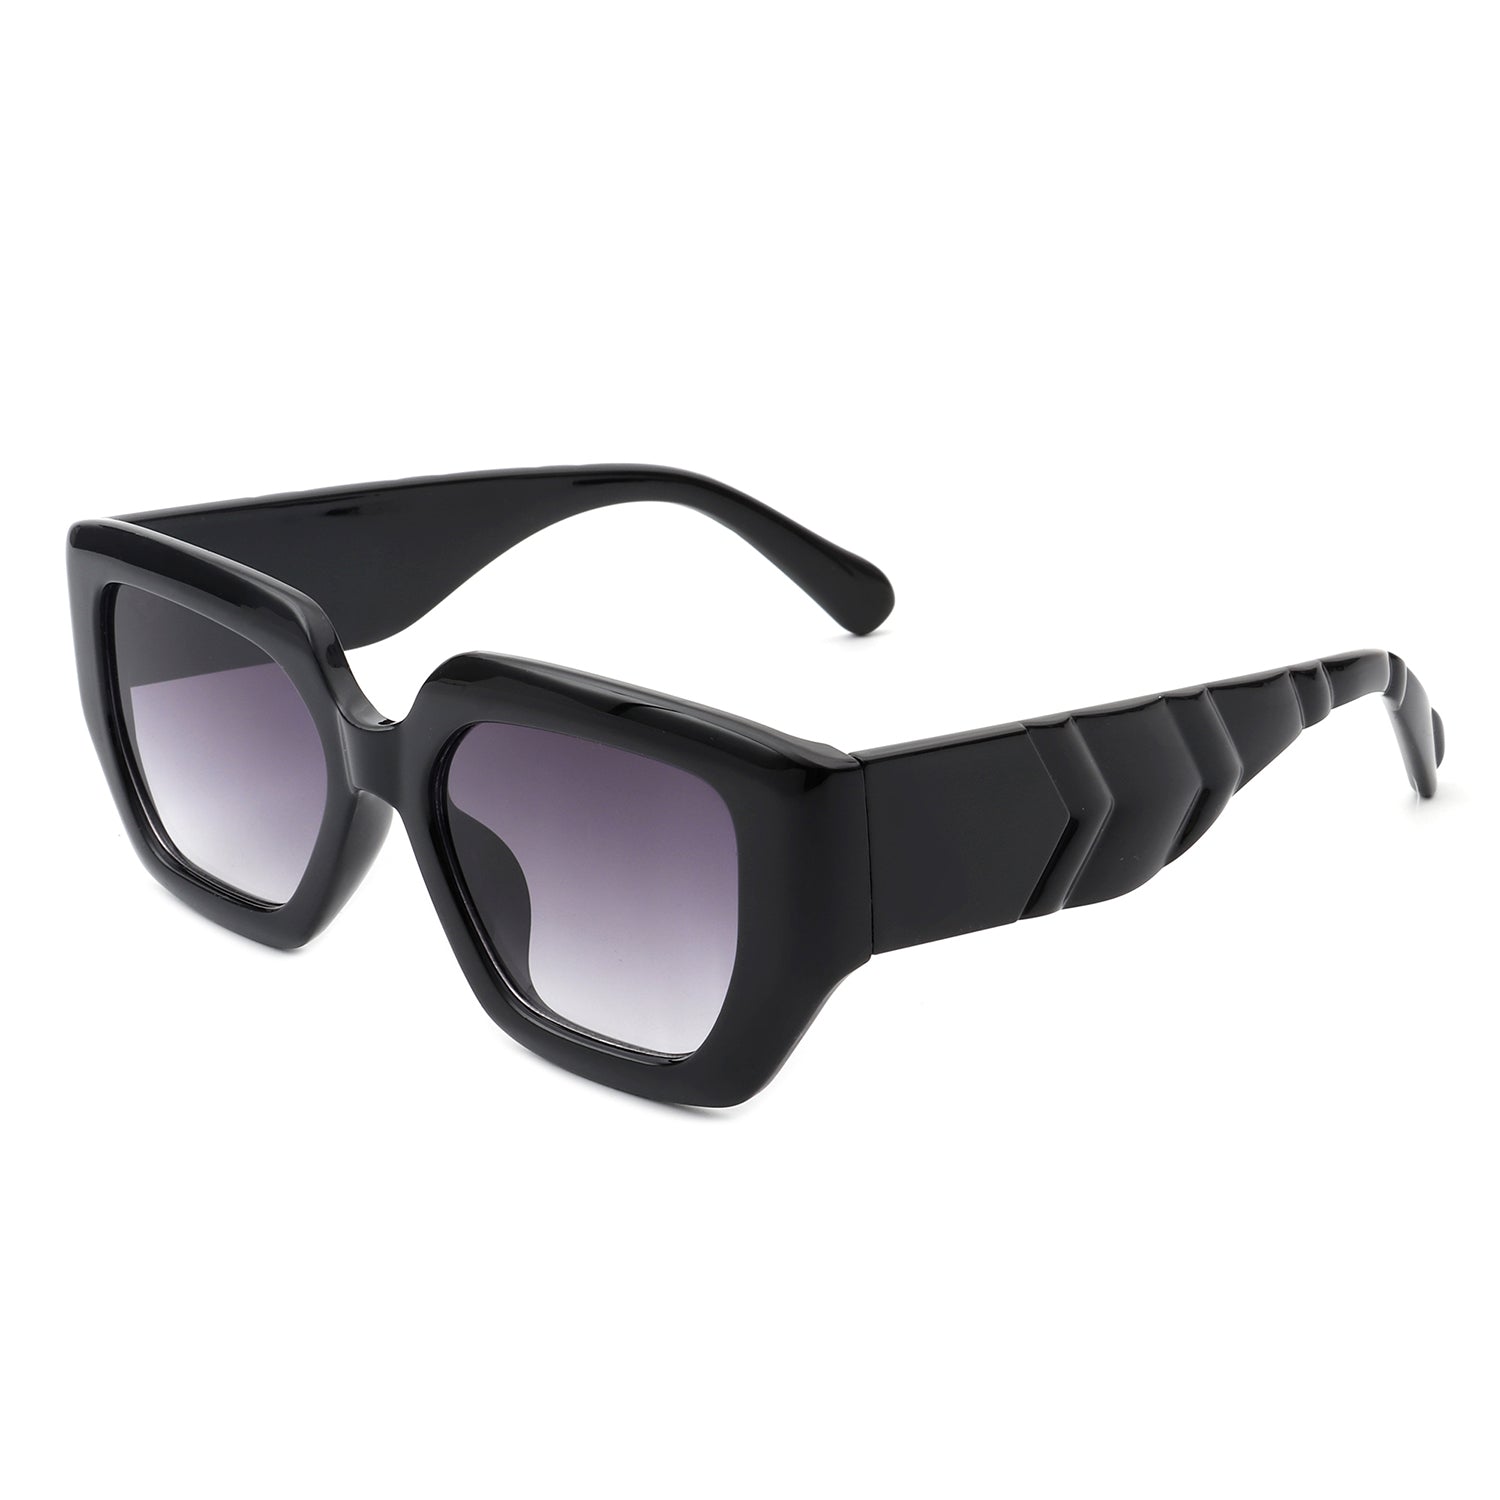 Women's Cat-eye Sunglasses With Vlogo by Valentino